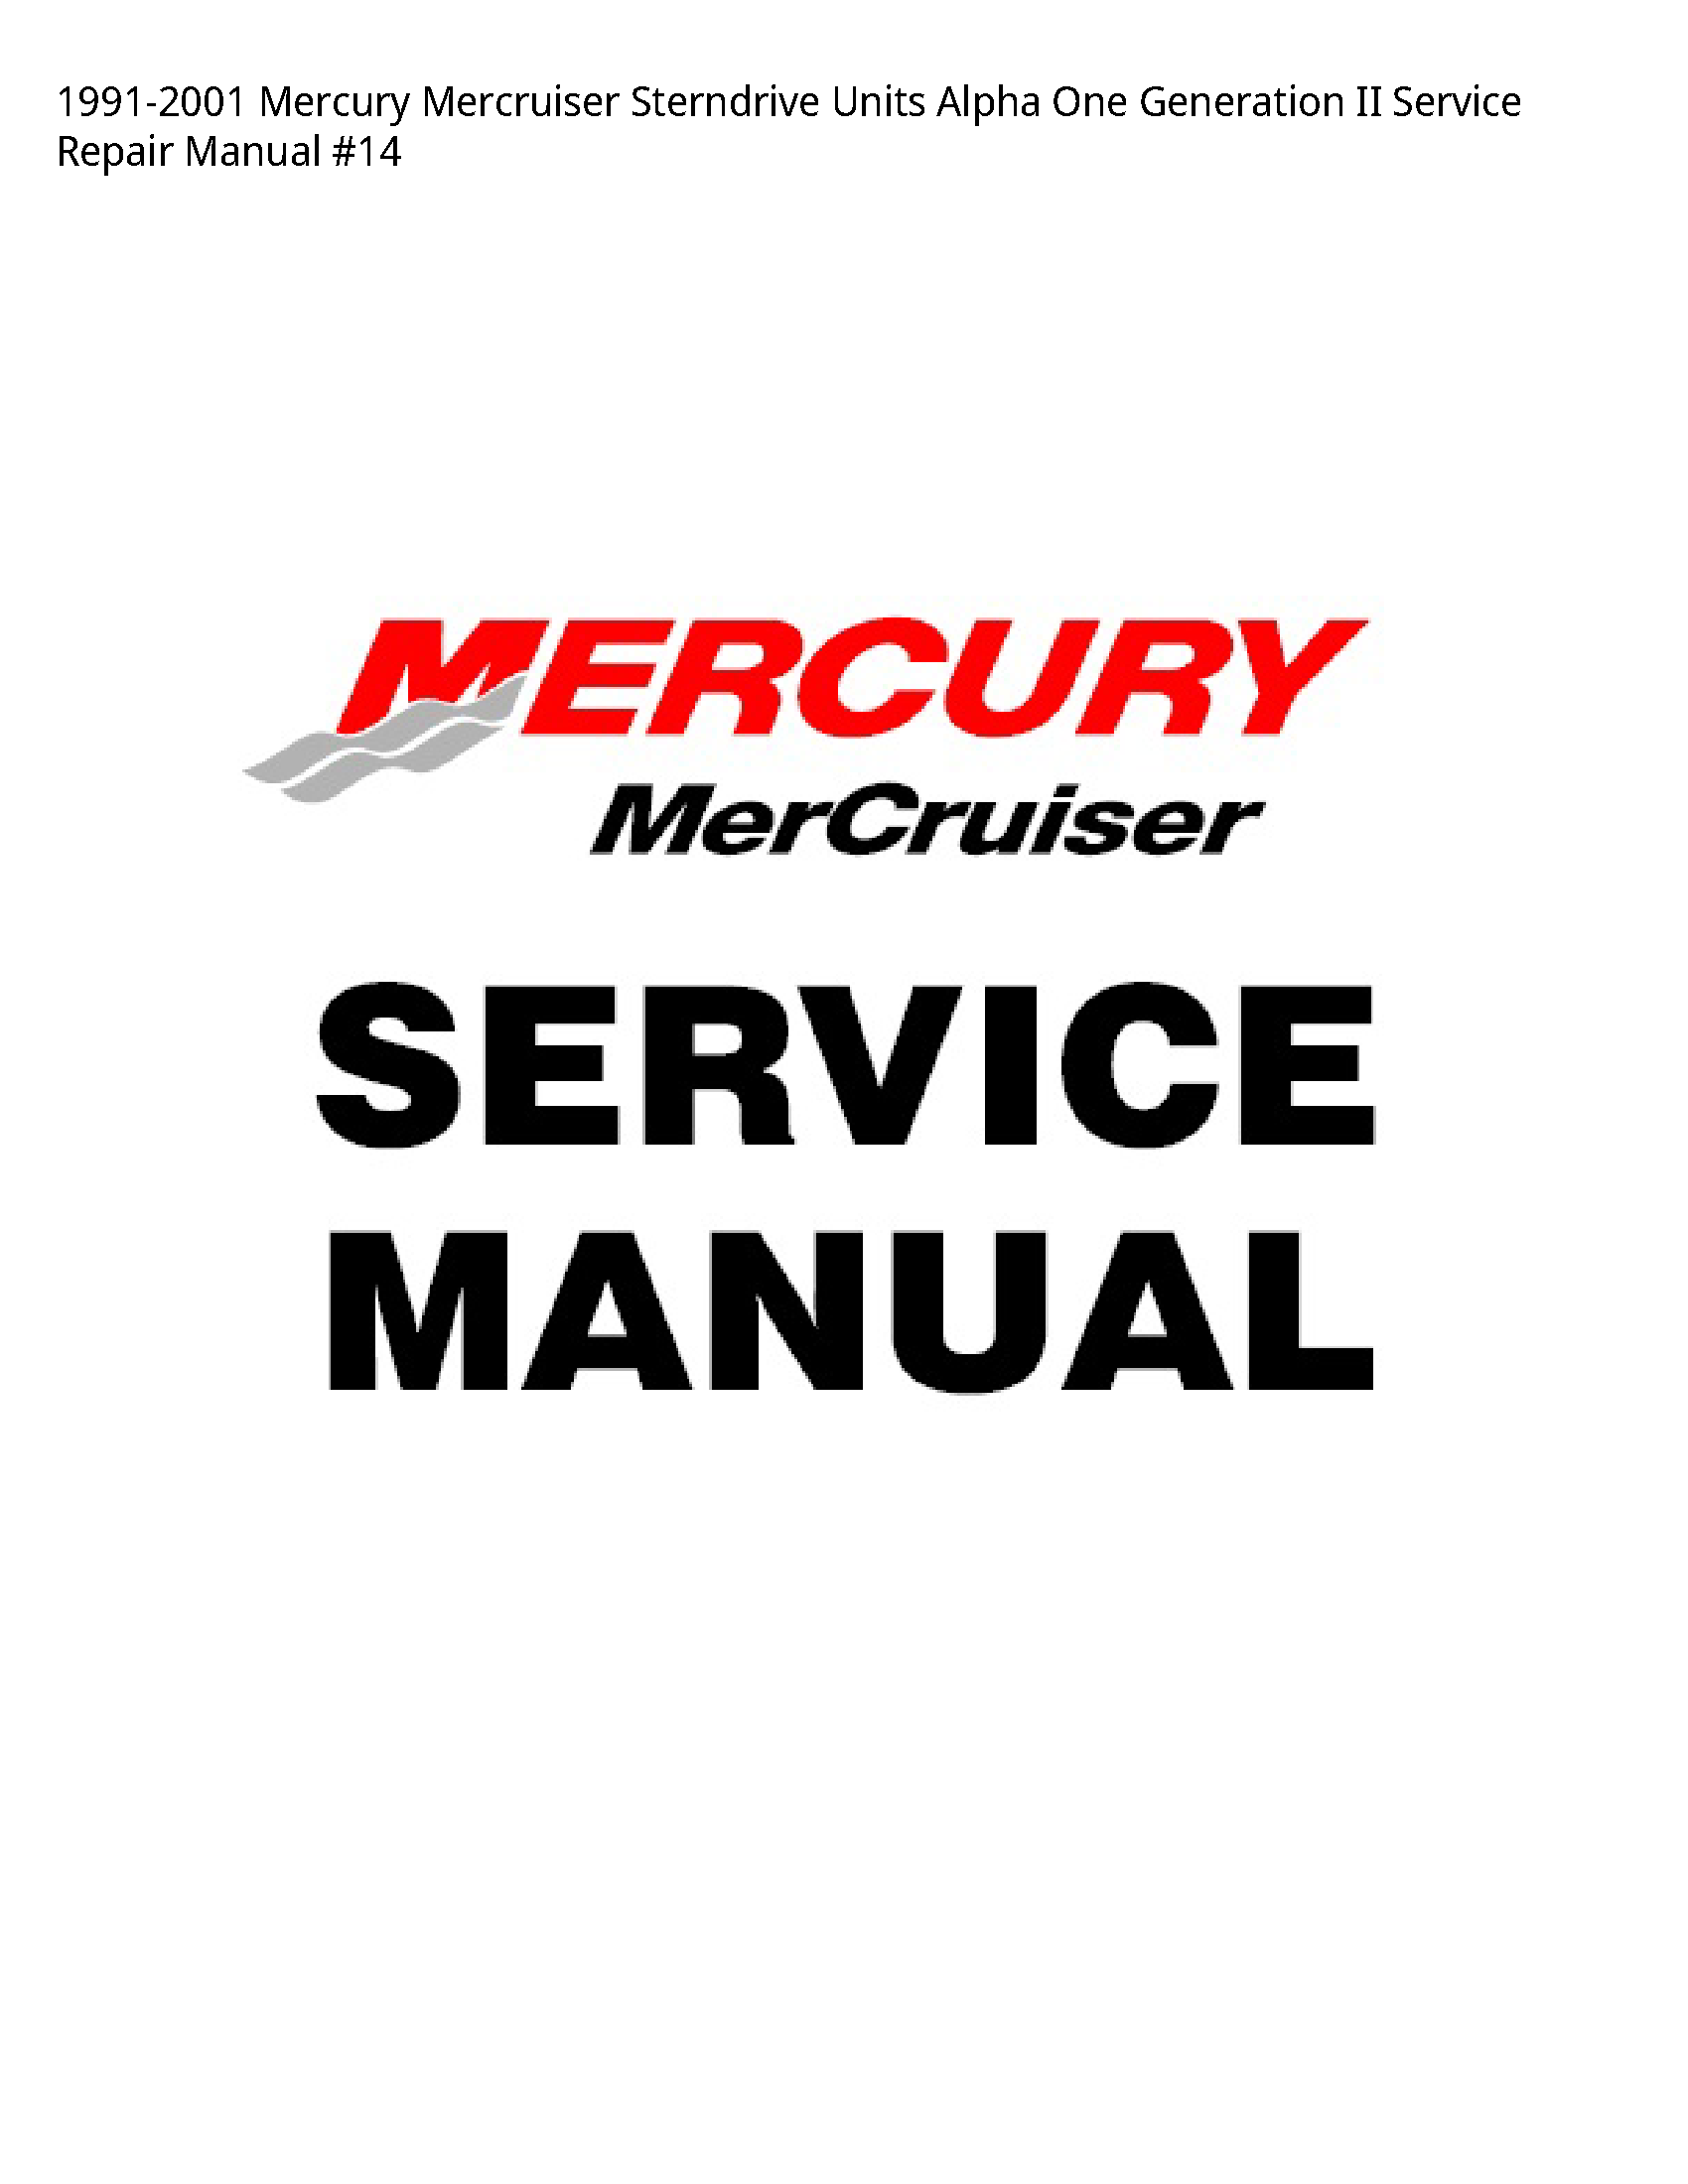 Mercury Mercruiser Sterndrive Units Alpha One Generation II manual